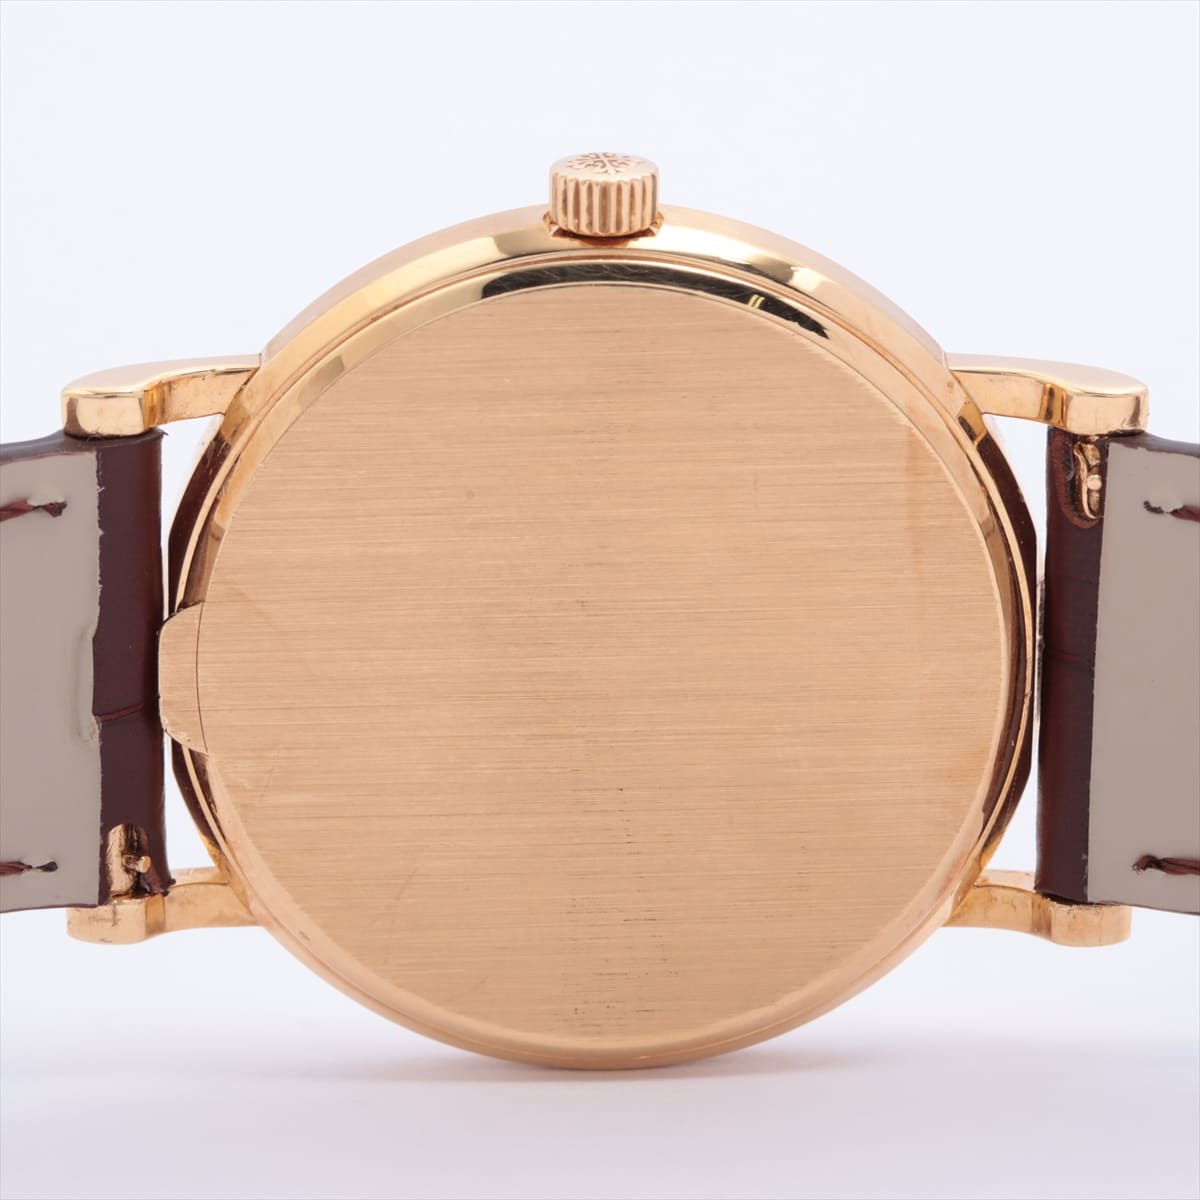 Patek Philippe Calatrava 3802 750 x Non original leather belt AT White-Face